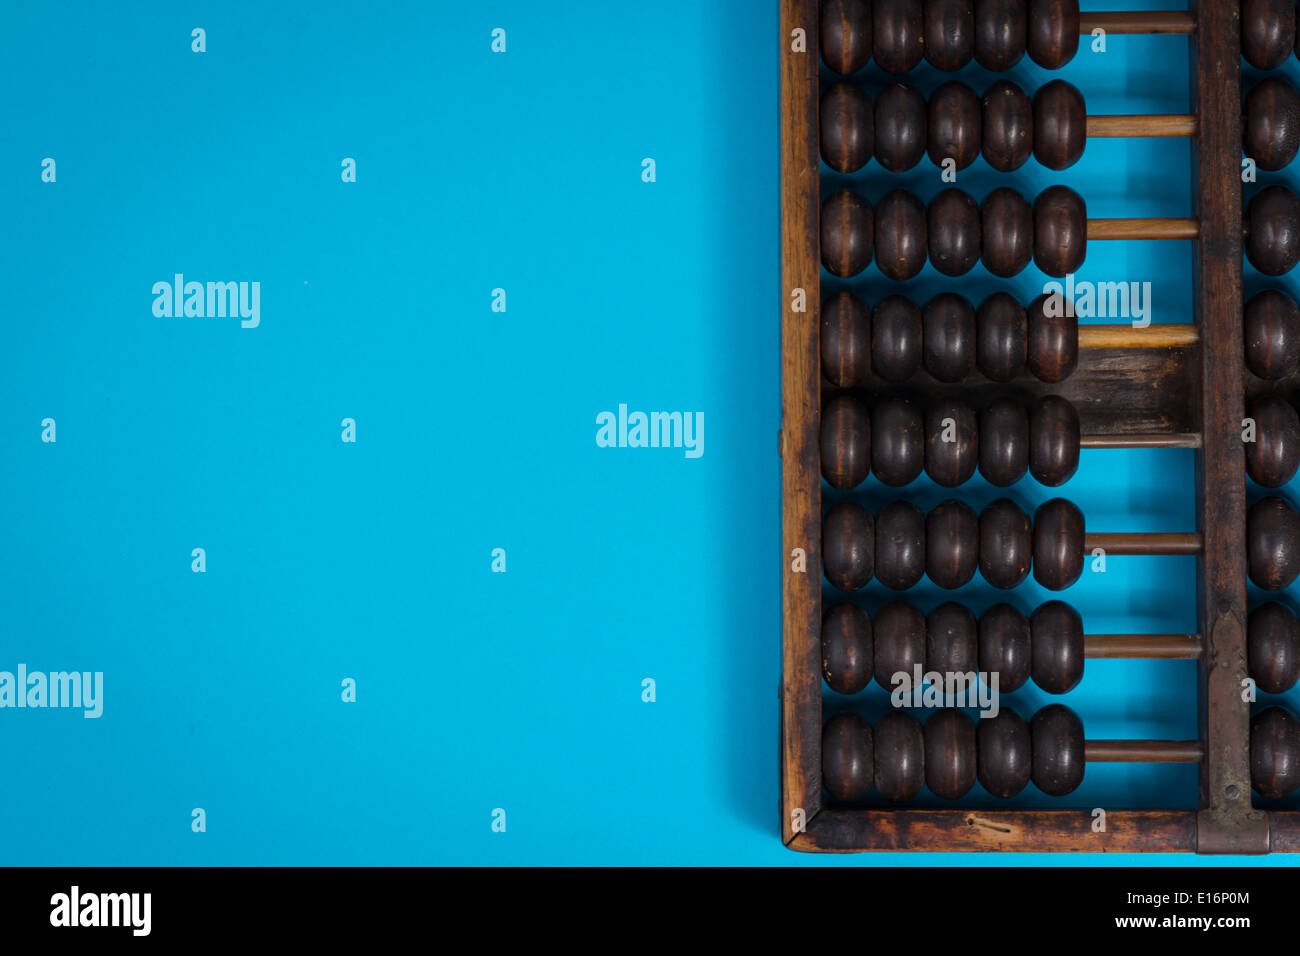 vintage abacus on blue background Stock Photo